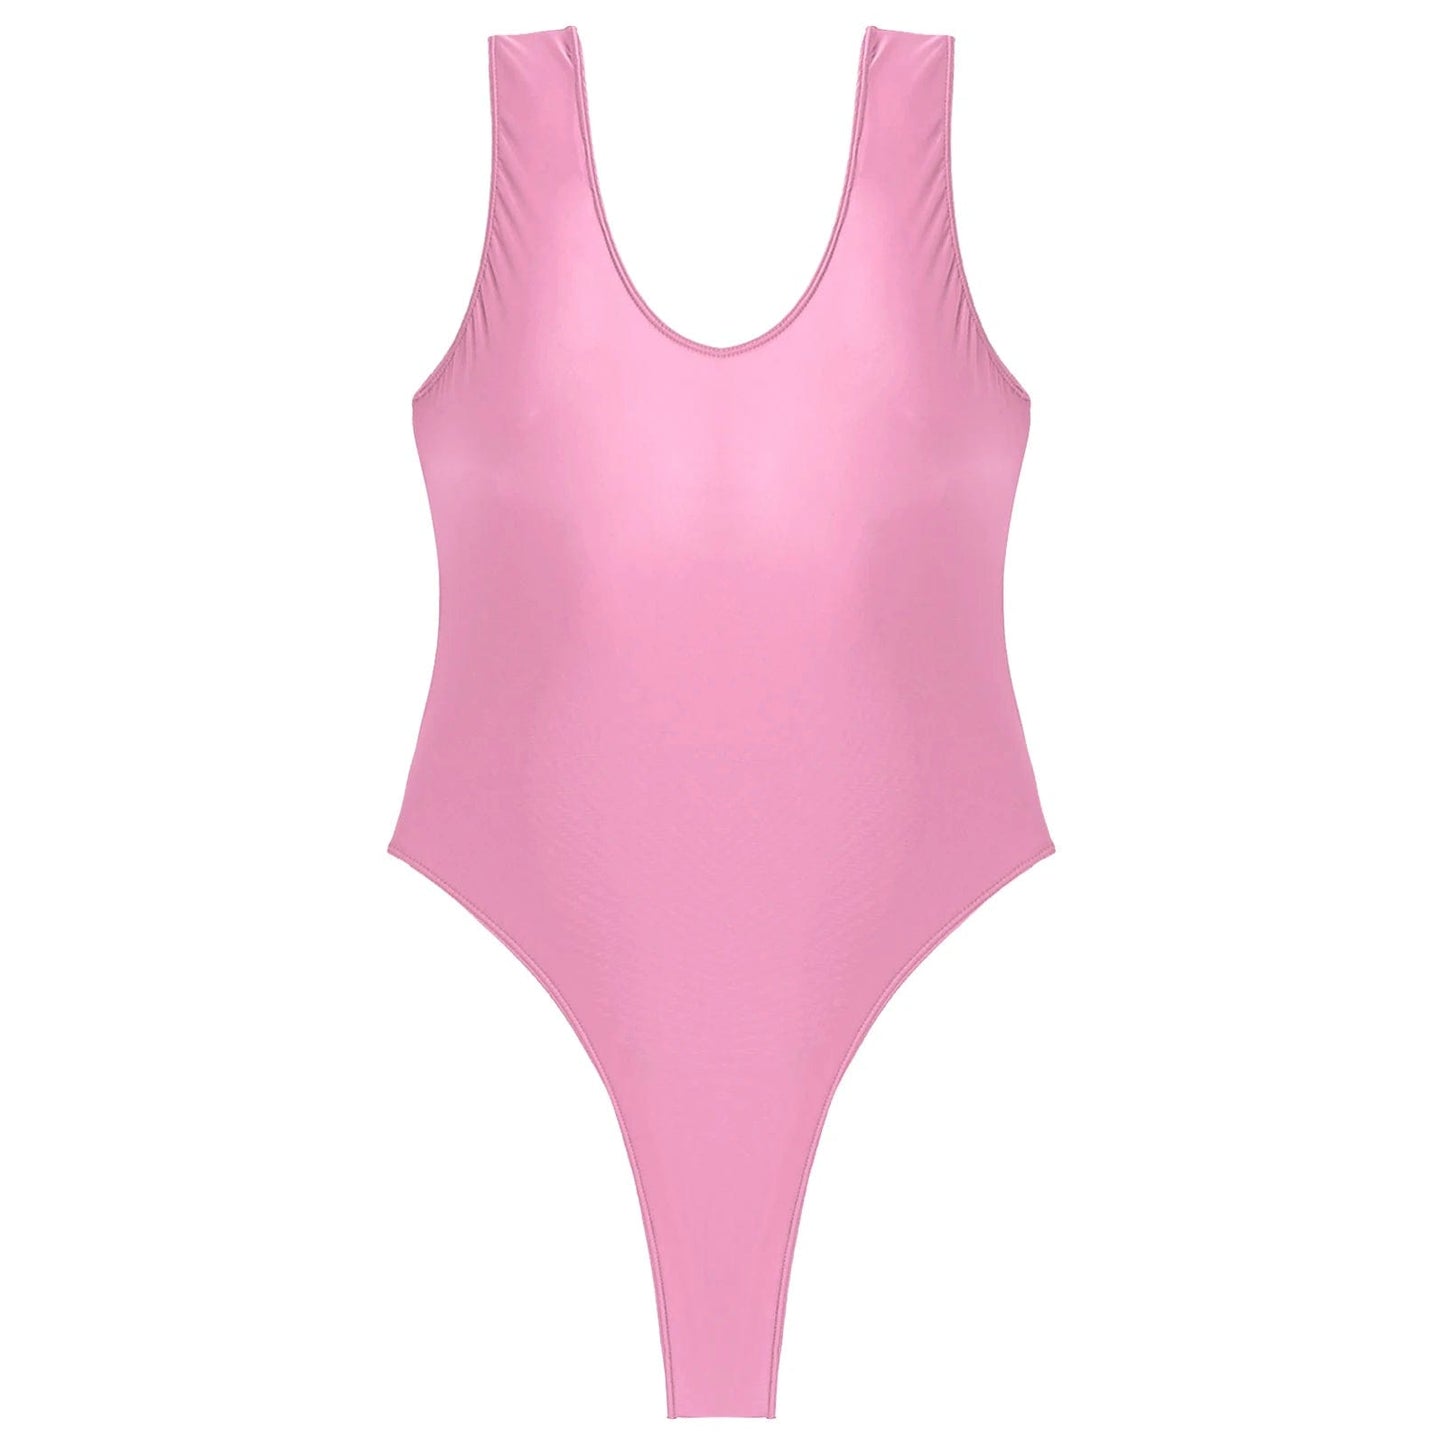 Kinky Cloth Pink / One Size Glossy High Cut Bodysuit